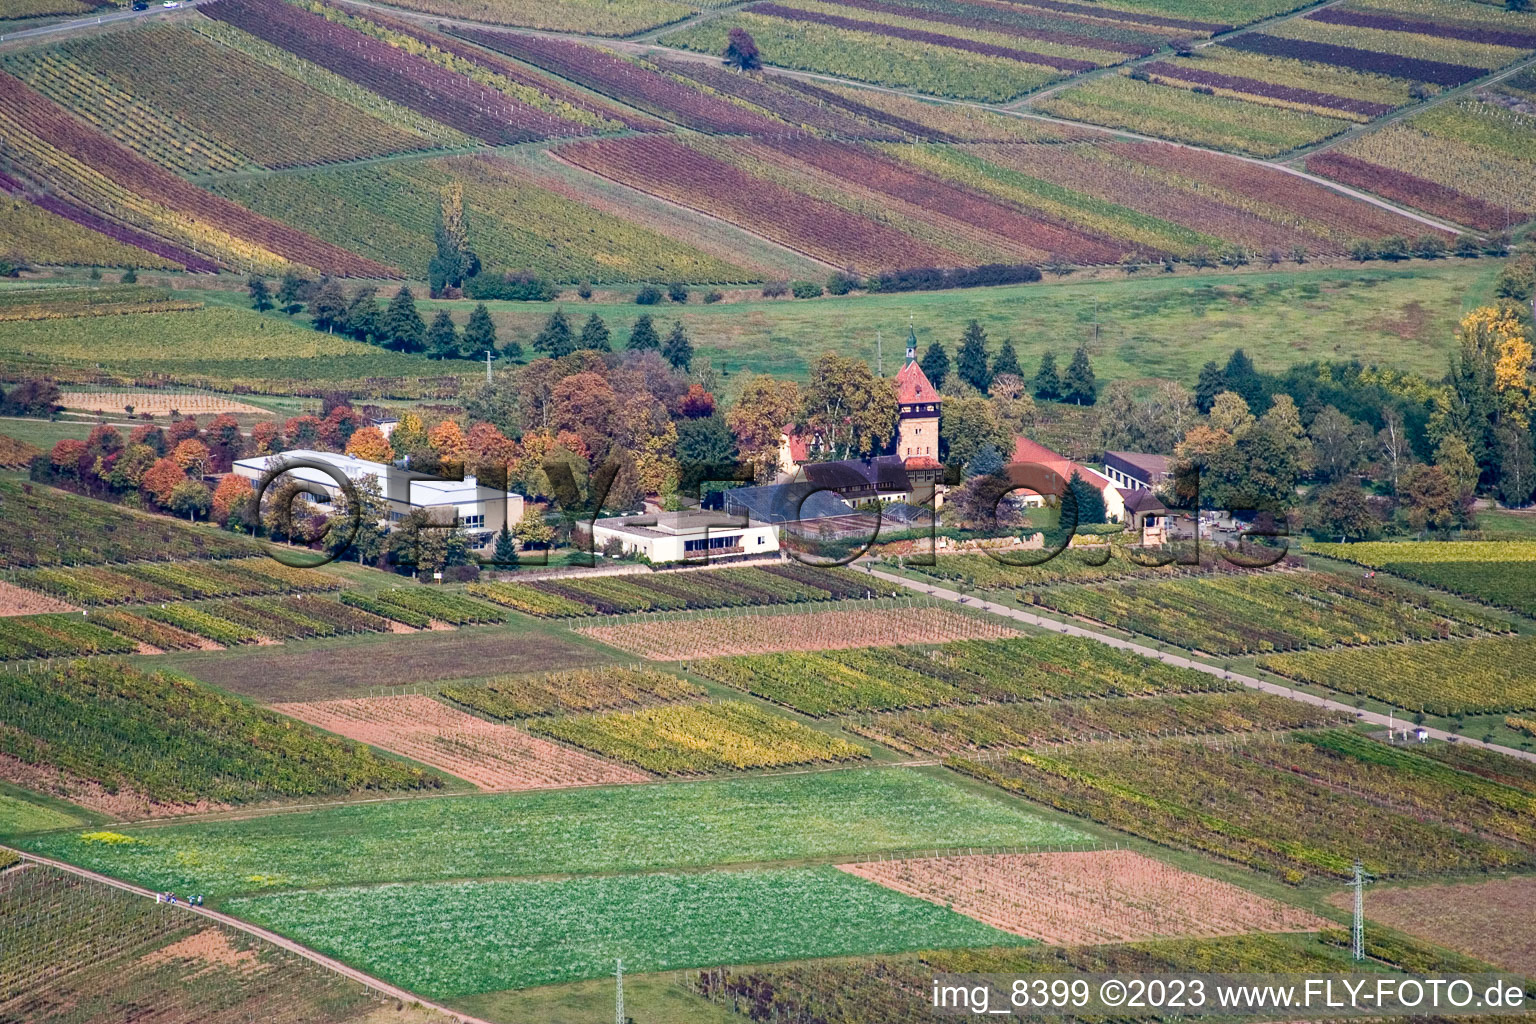 BFA-Geilweilerhof (Vine Research Institute) in Siebeldingen in the state Rhineland-Palatinate, Germany from above